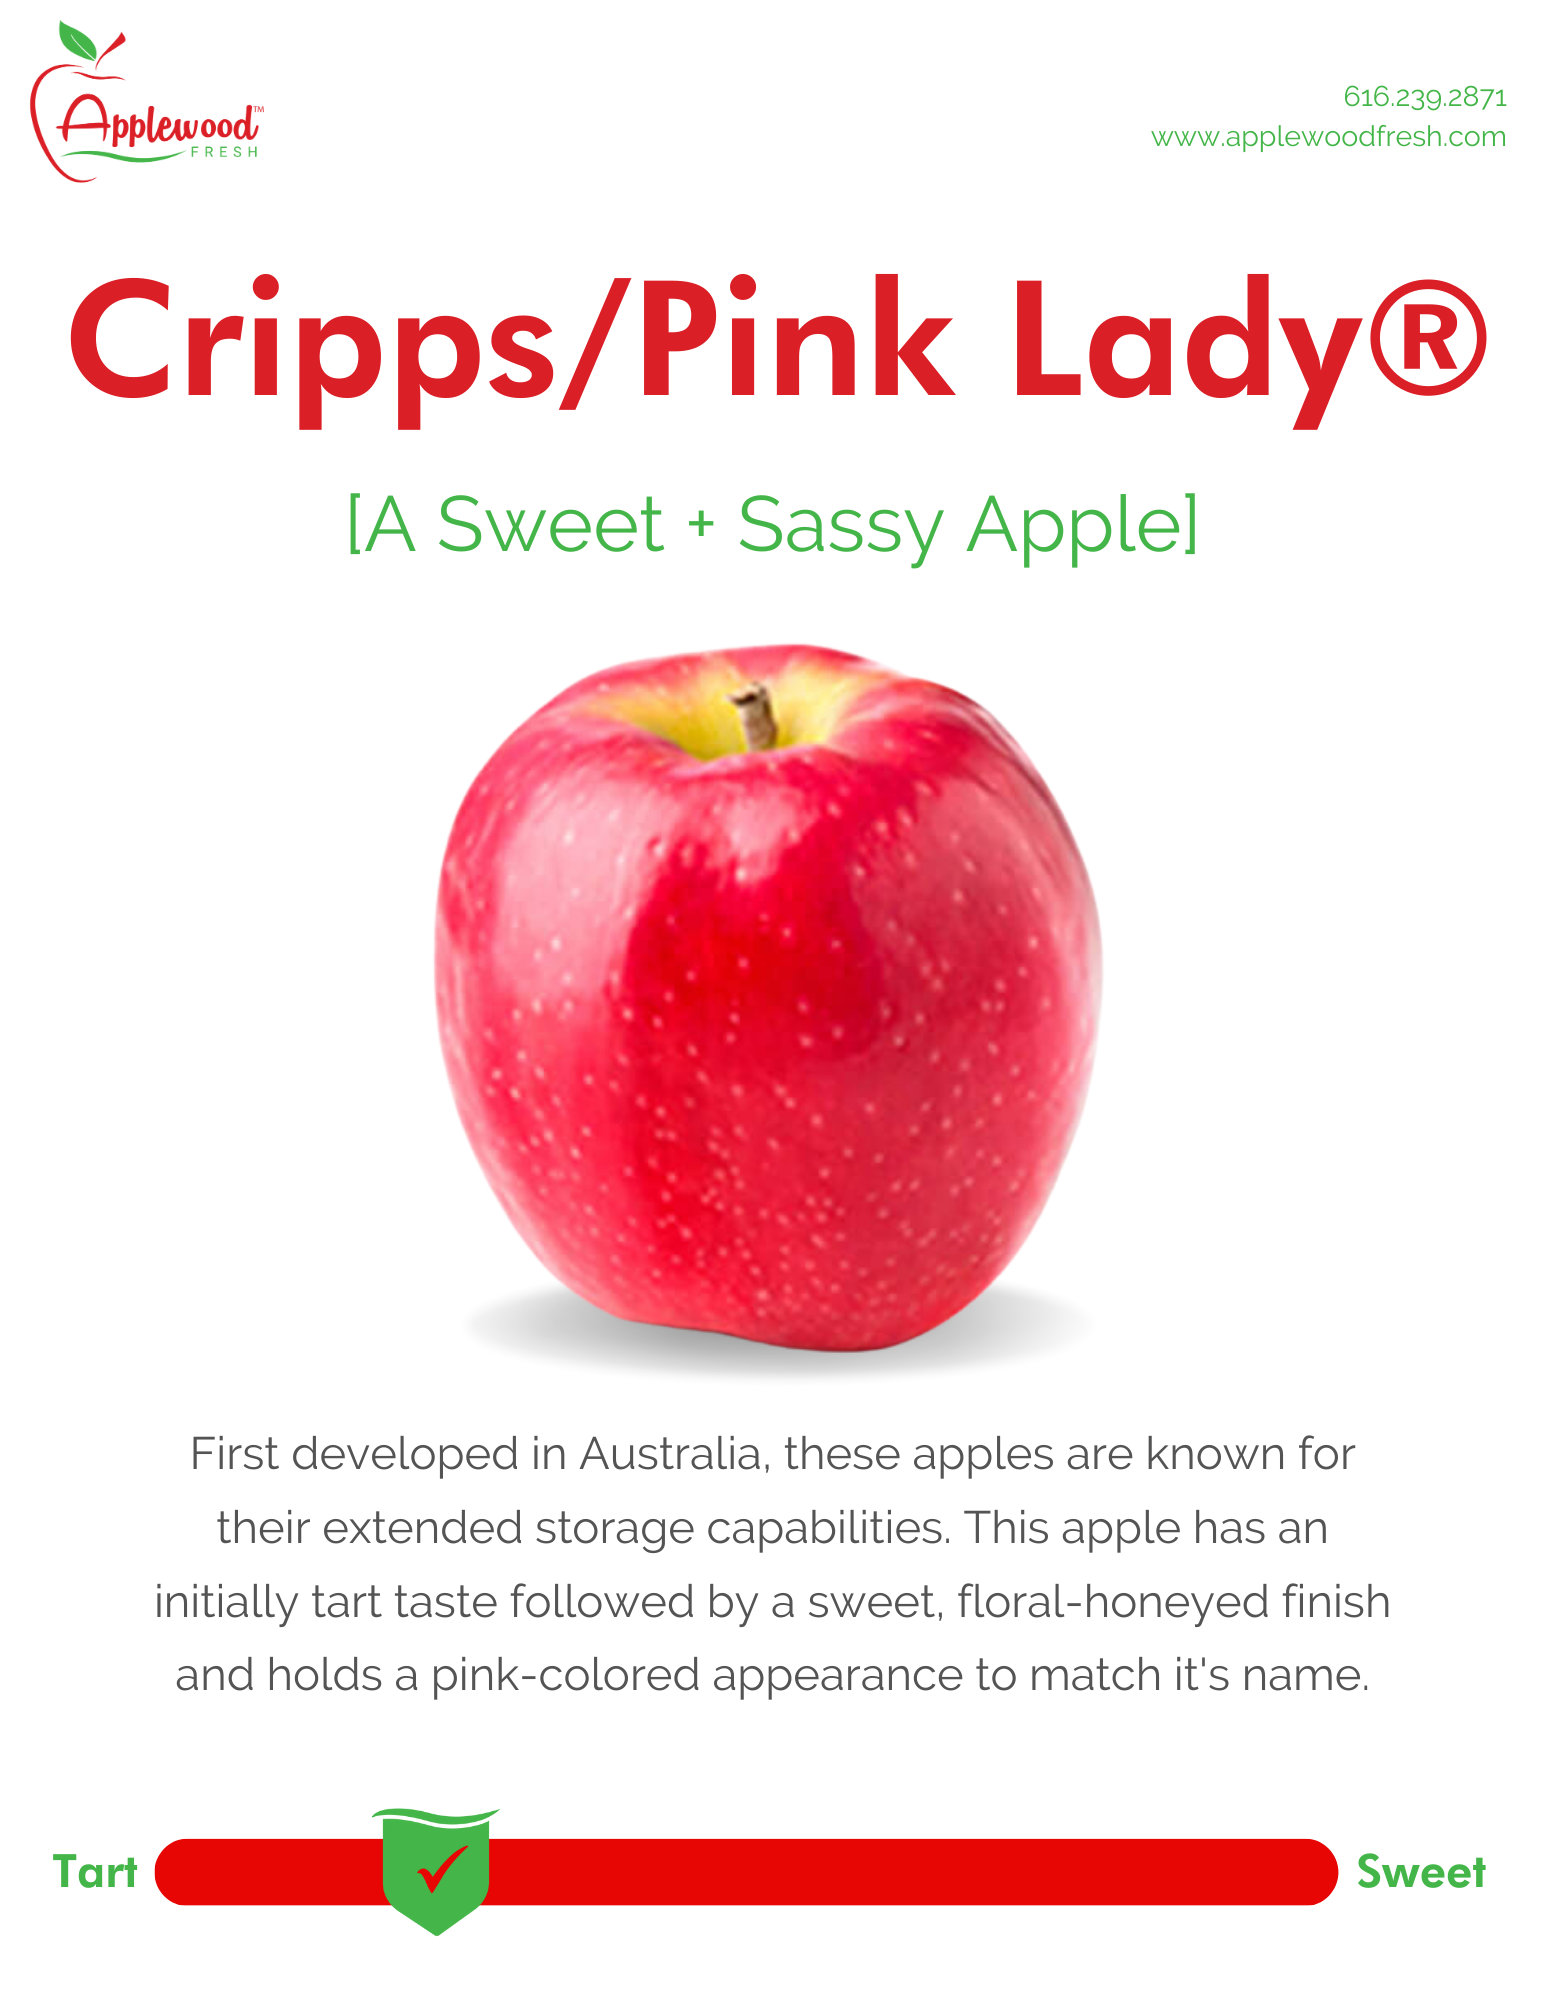 Cripps Pink / Pink Lady Apple Information Sheet